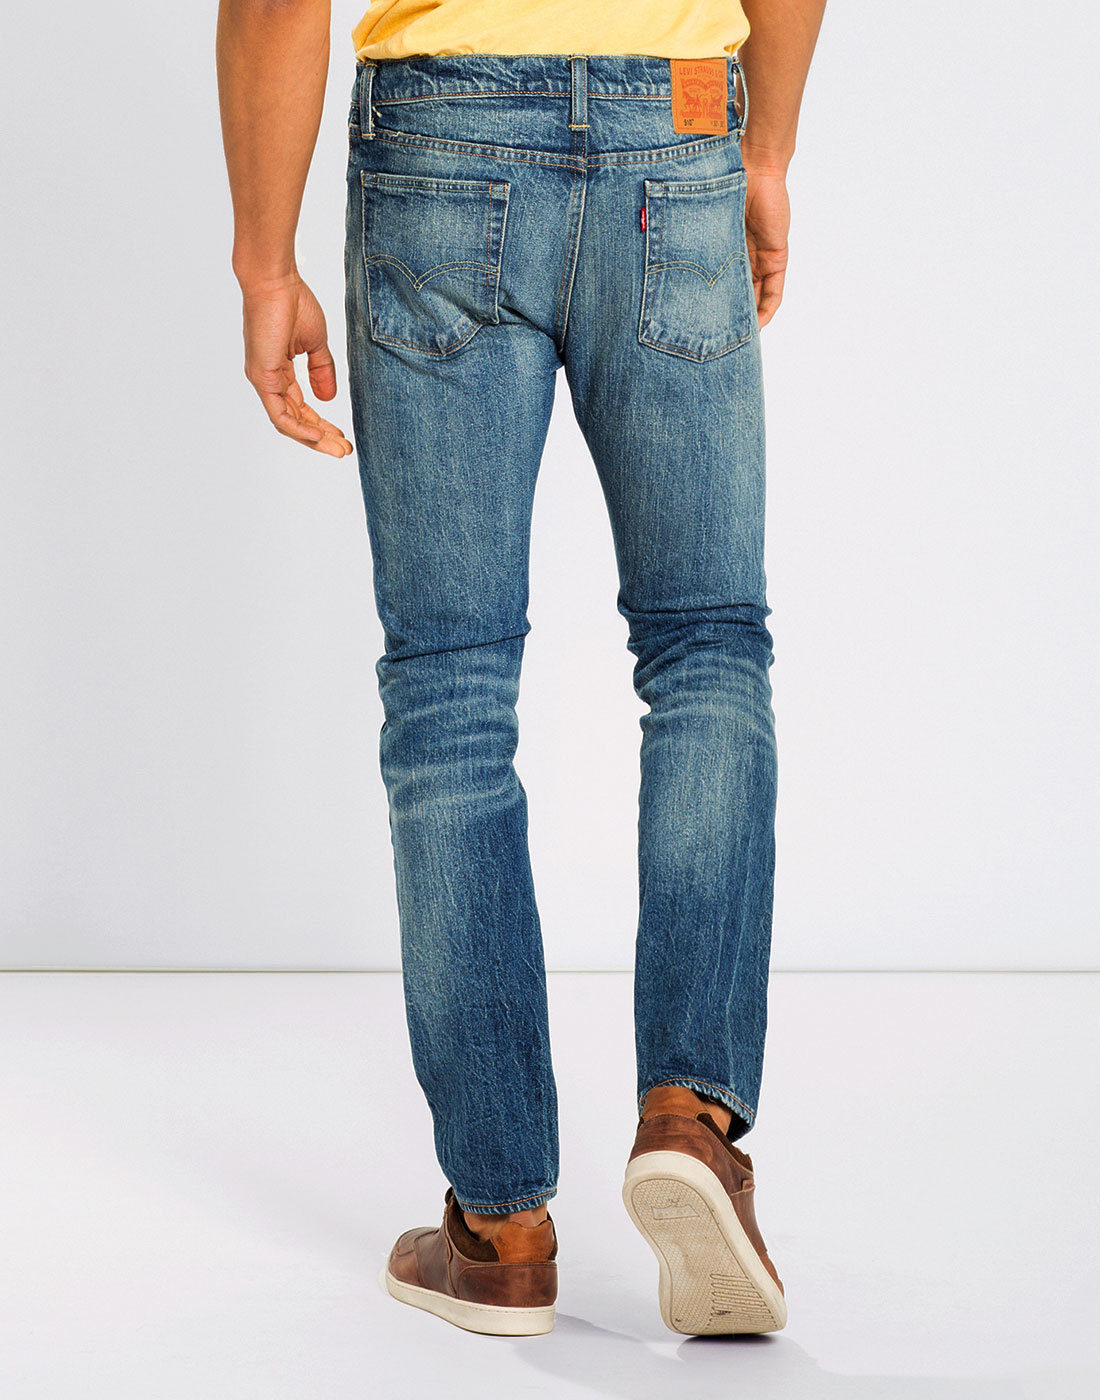 LEVI'S® 510 Retro Indie Mod Skinny Fit Denim Jeans in Eric Blue